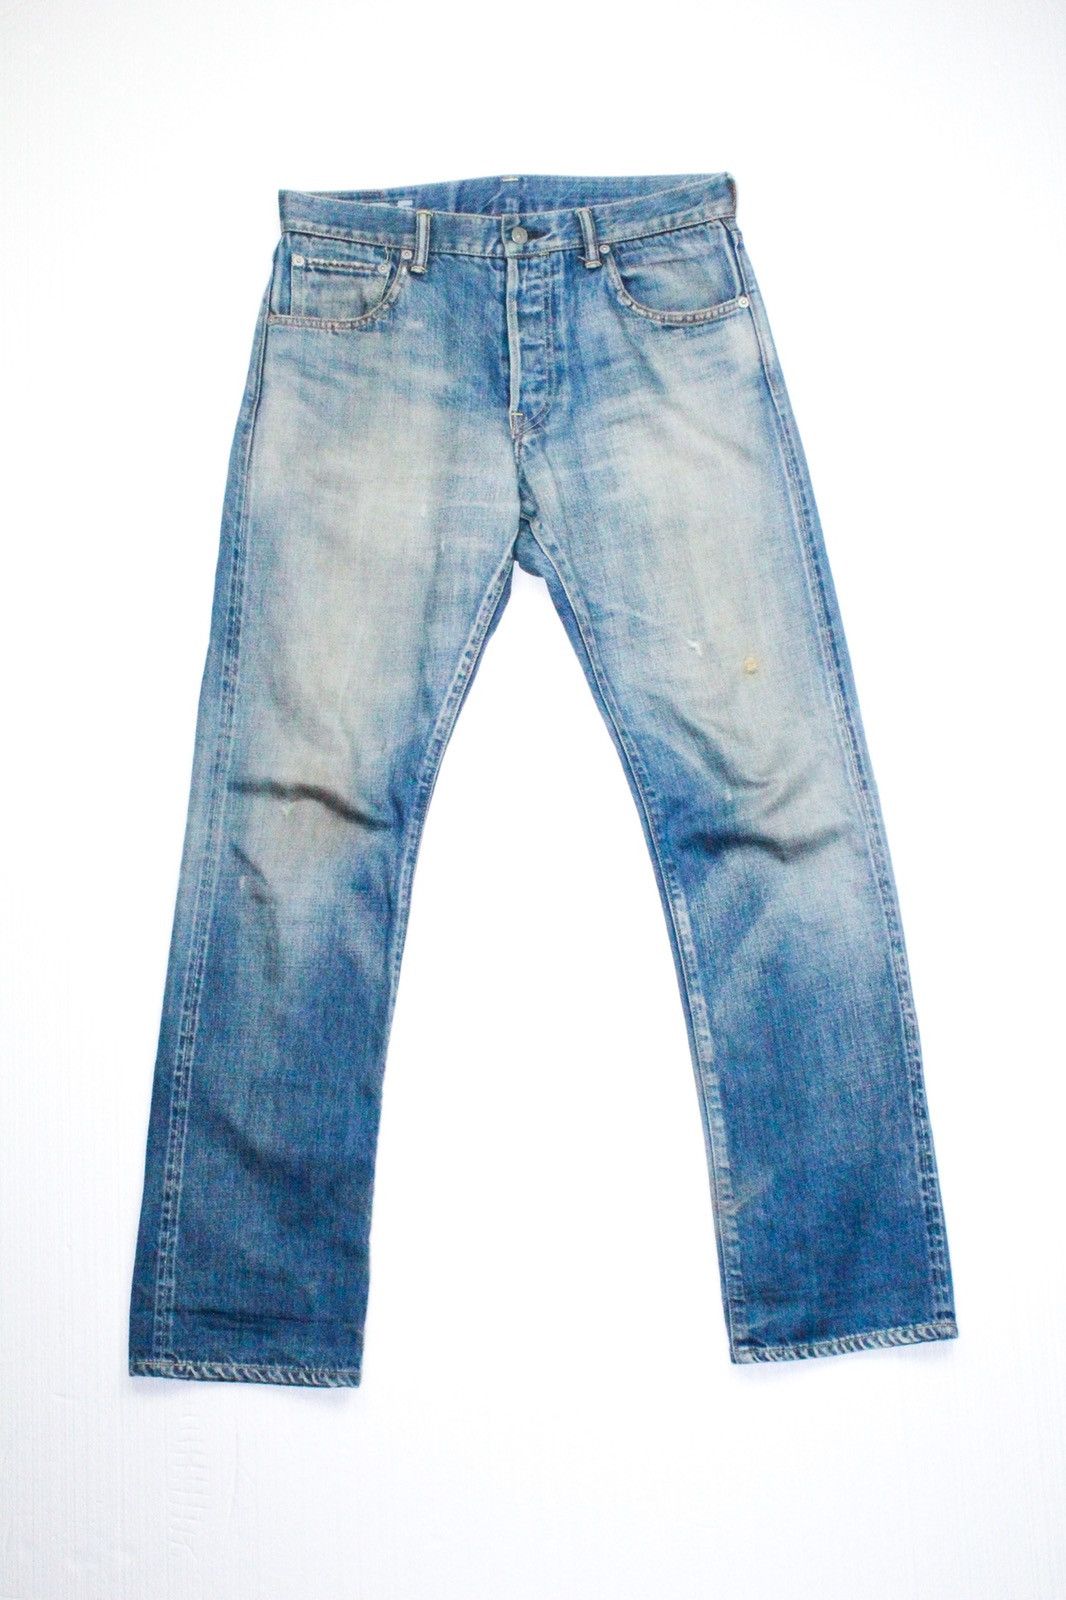 Visvim Social Sculpture 01.2D5 Jeans (DMDG) | Grailed